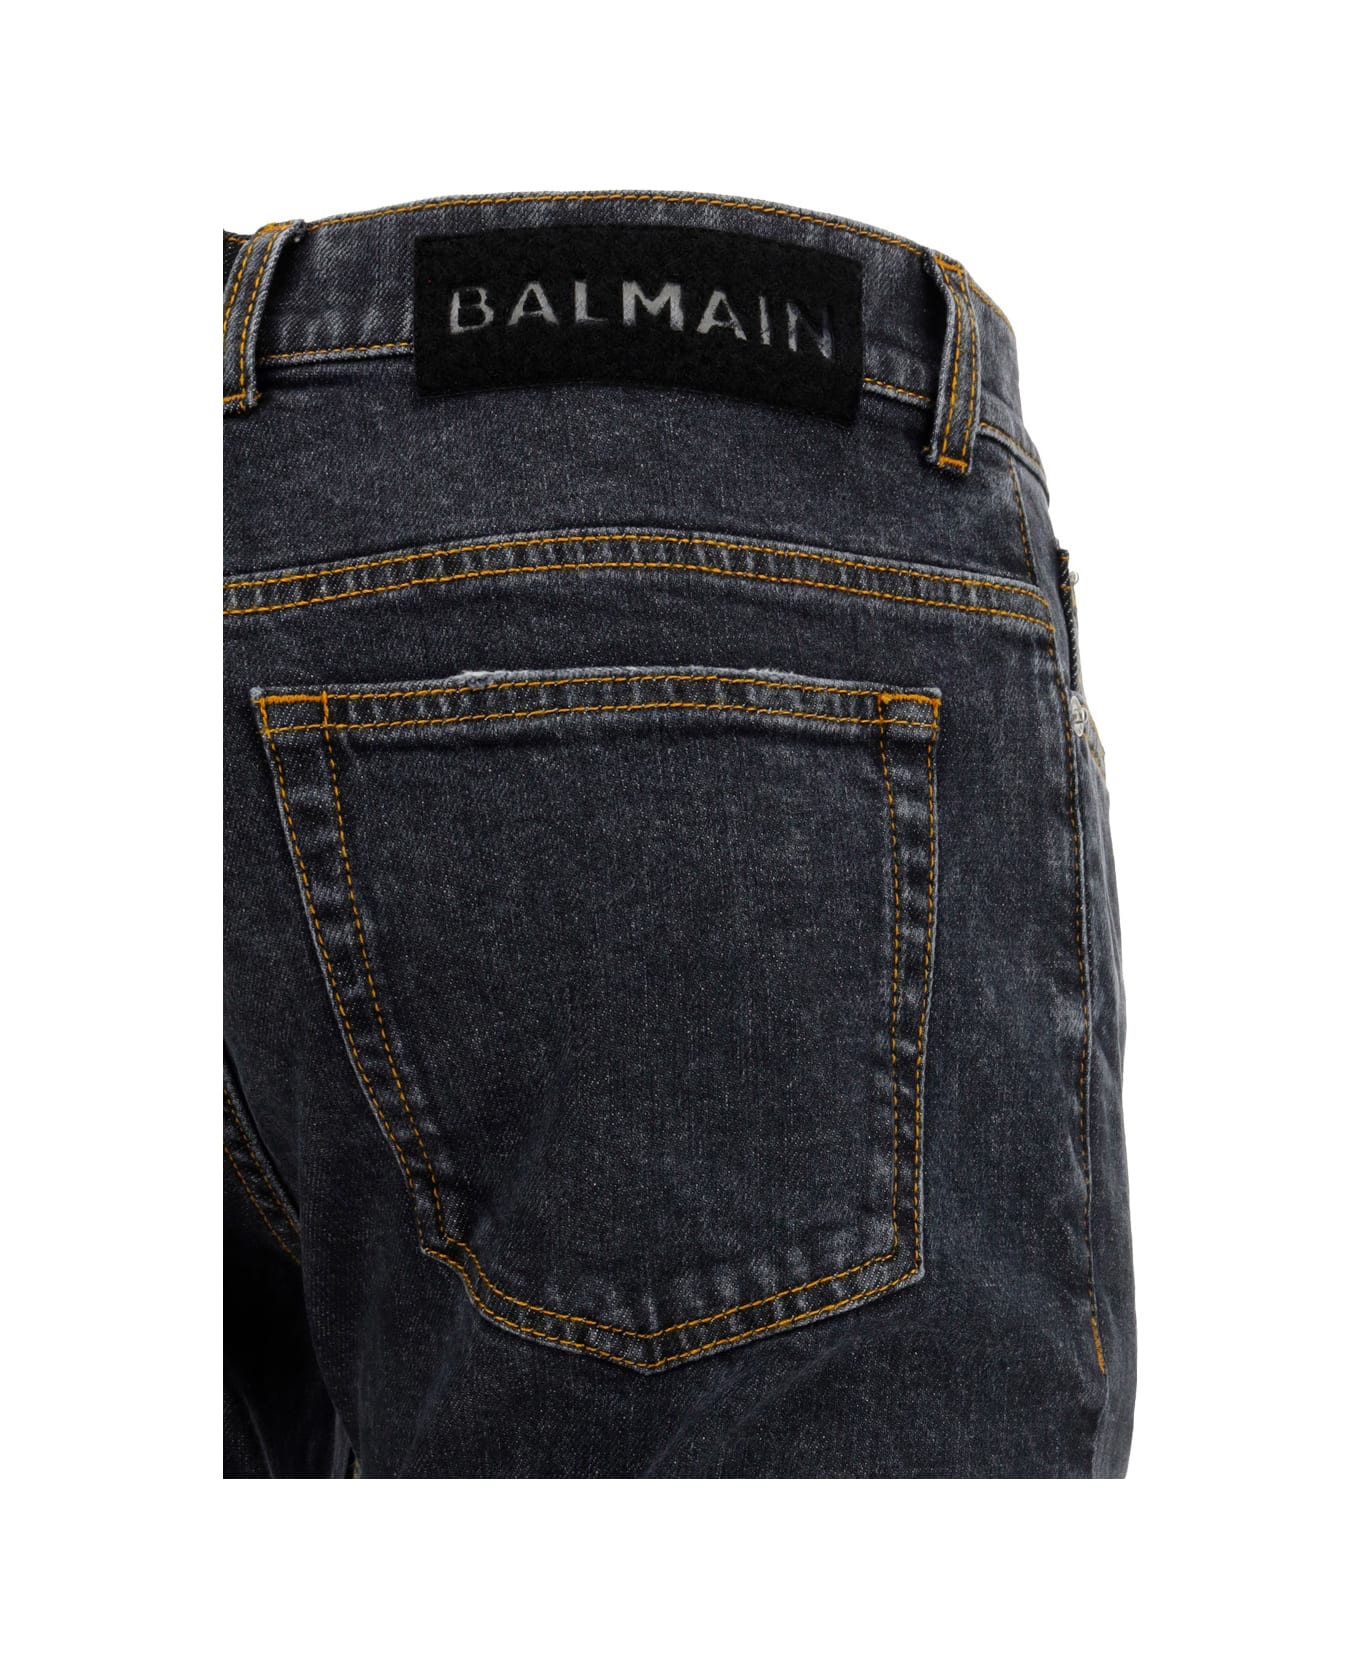 Balmain 5-pocket Slim Fit Jeans - Noir Delave' デニム